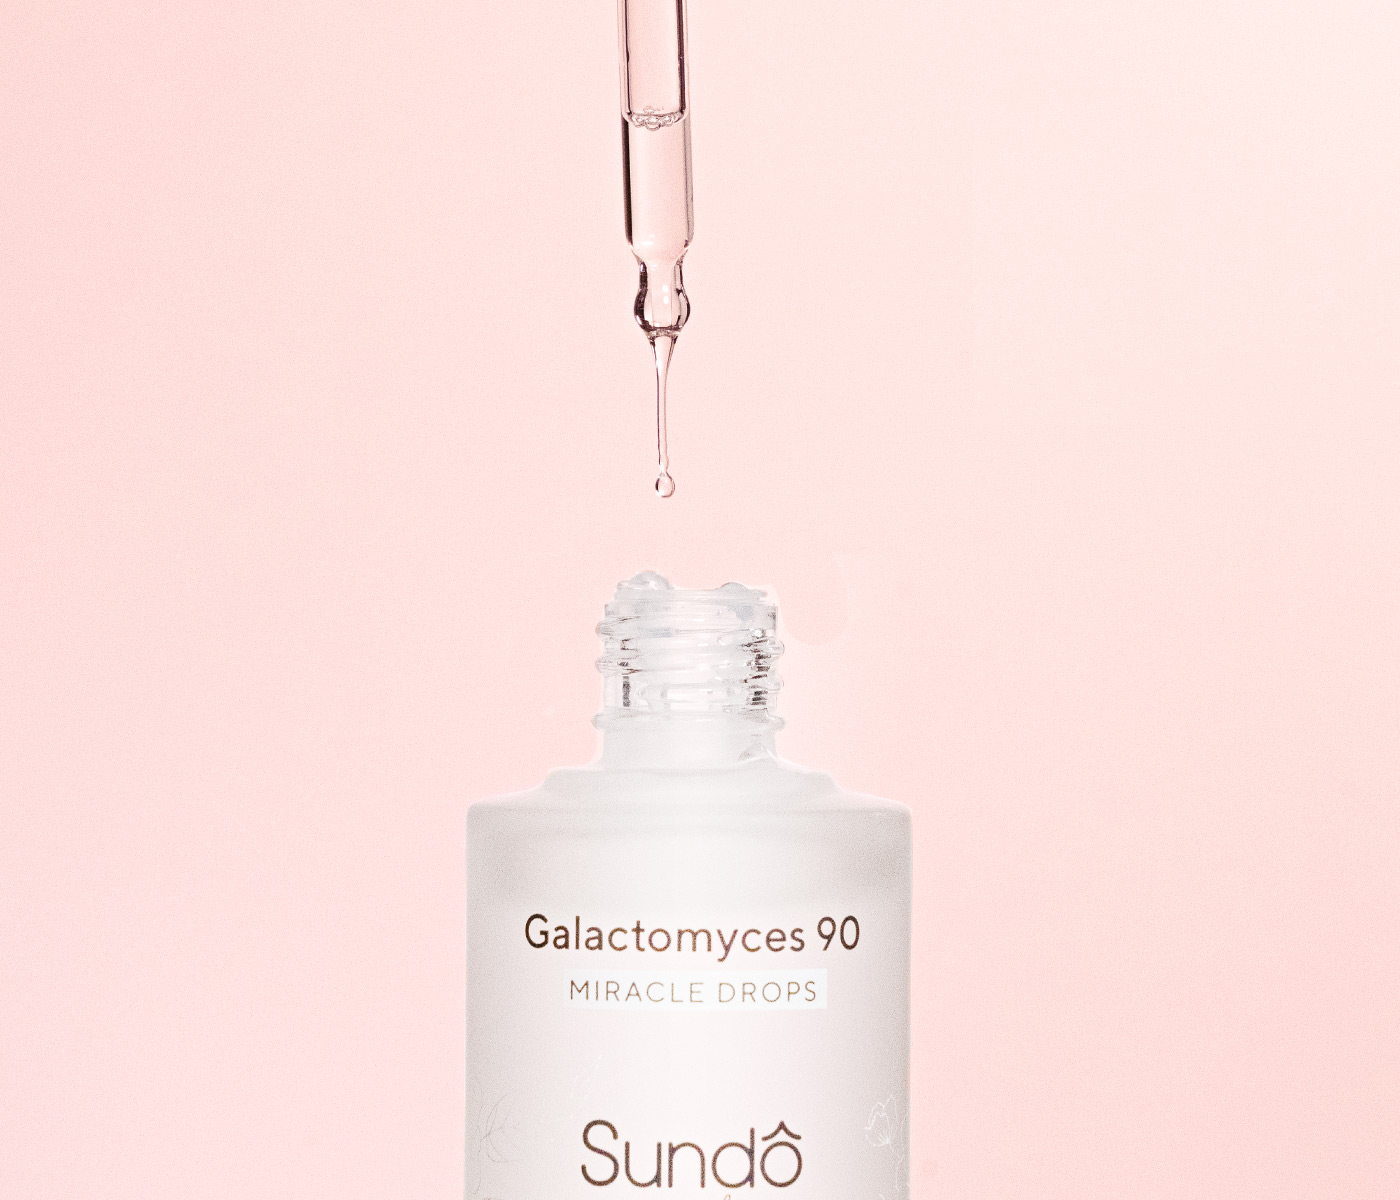 galactomyces-90-serum-kbeauty-sundo-image2.jpg